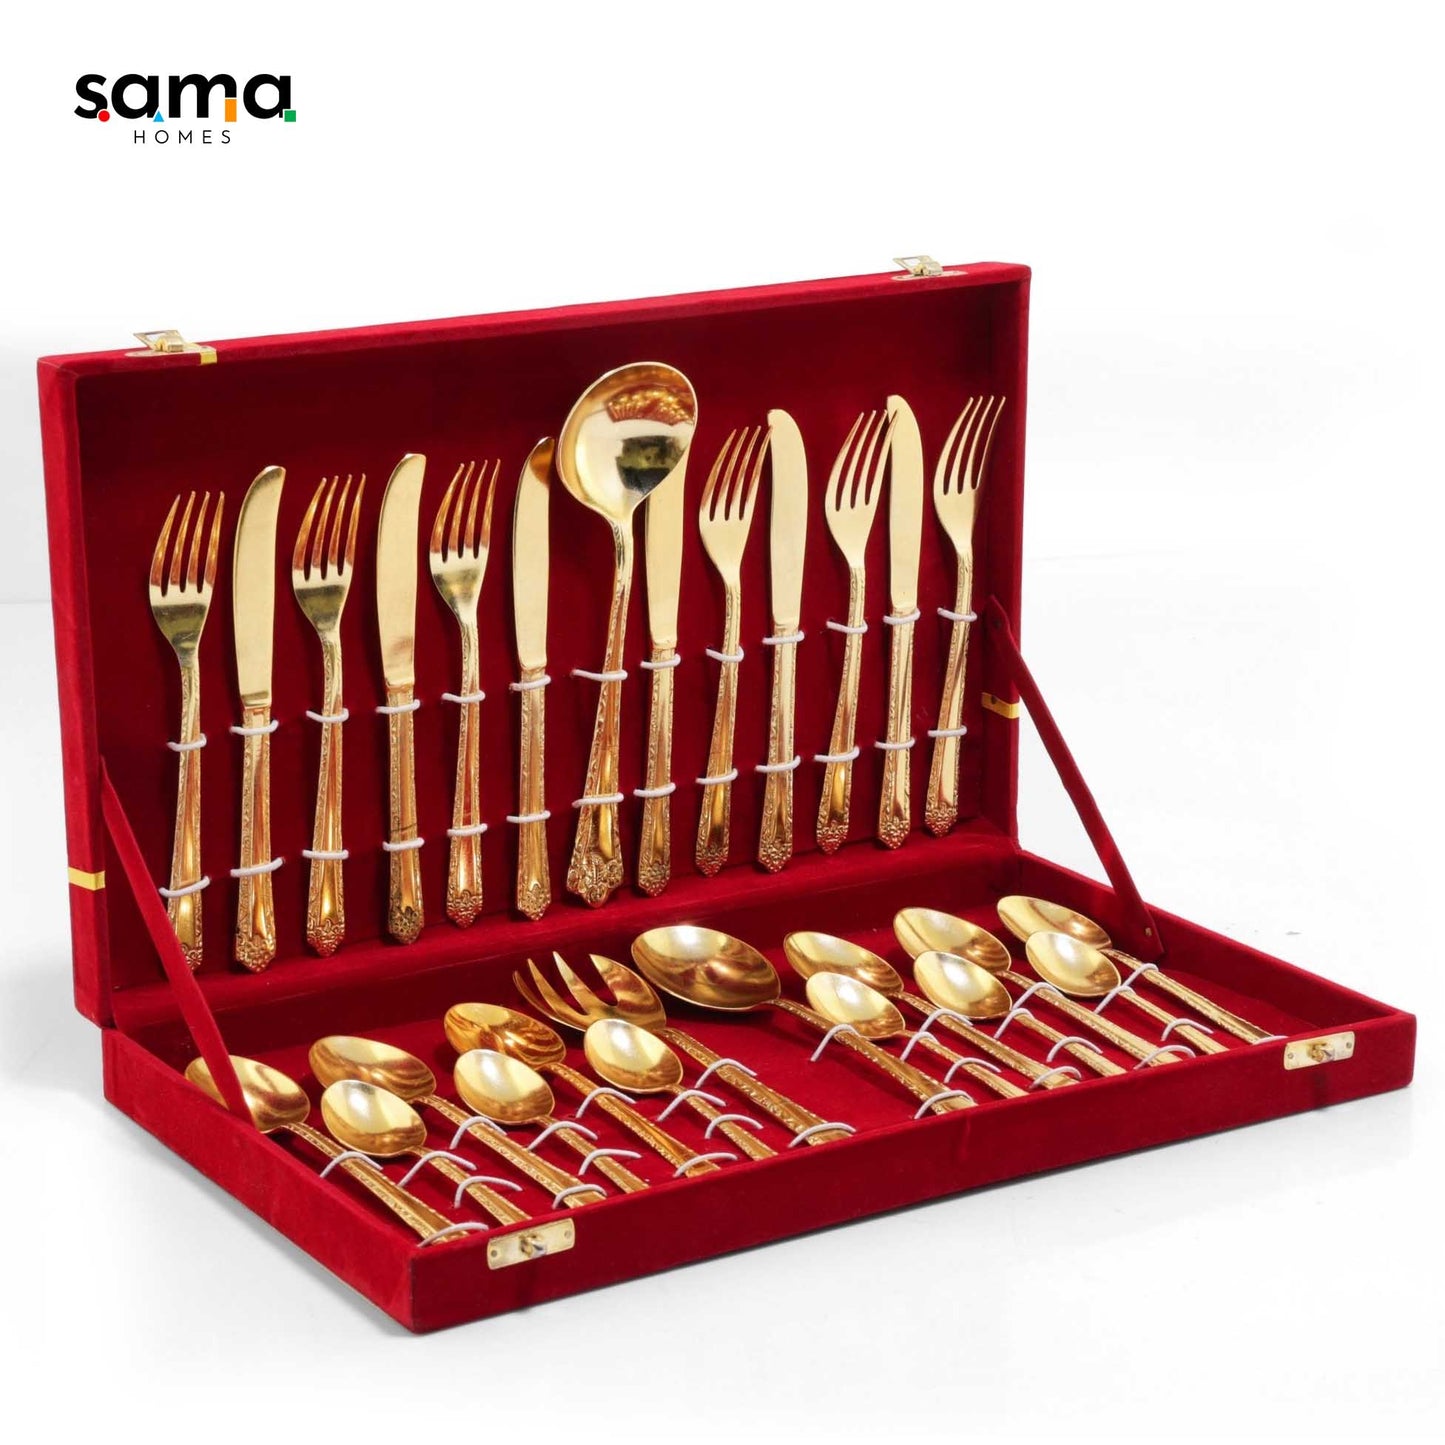 SAMA Homes - brass cutlery set